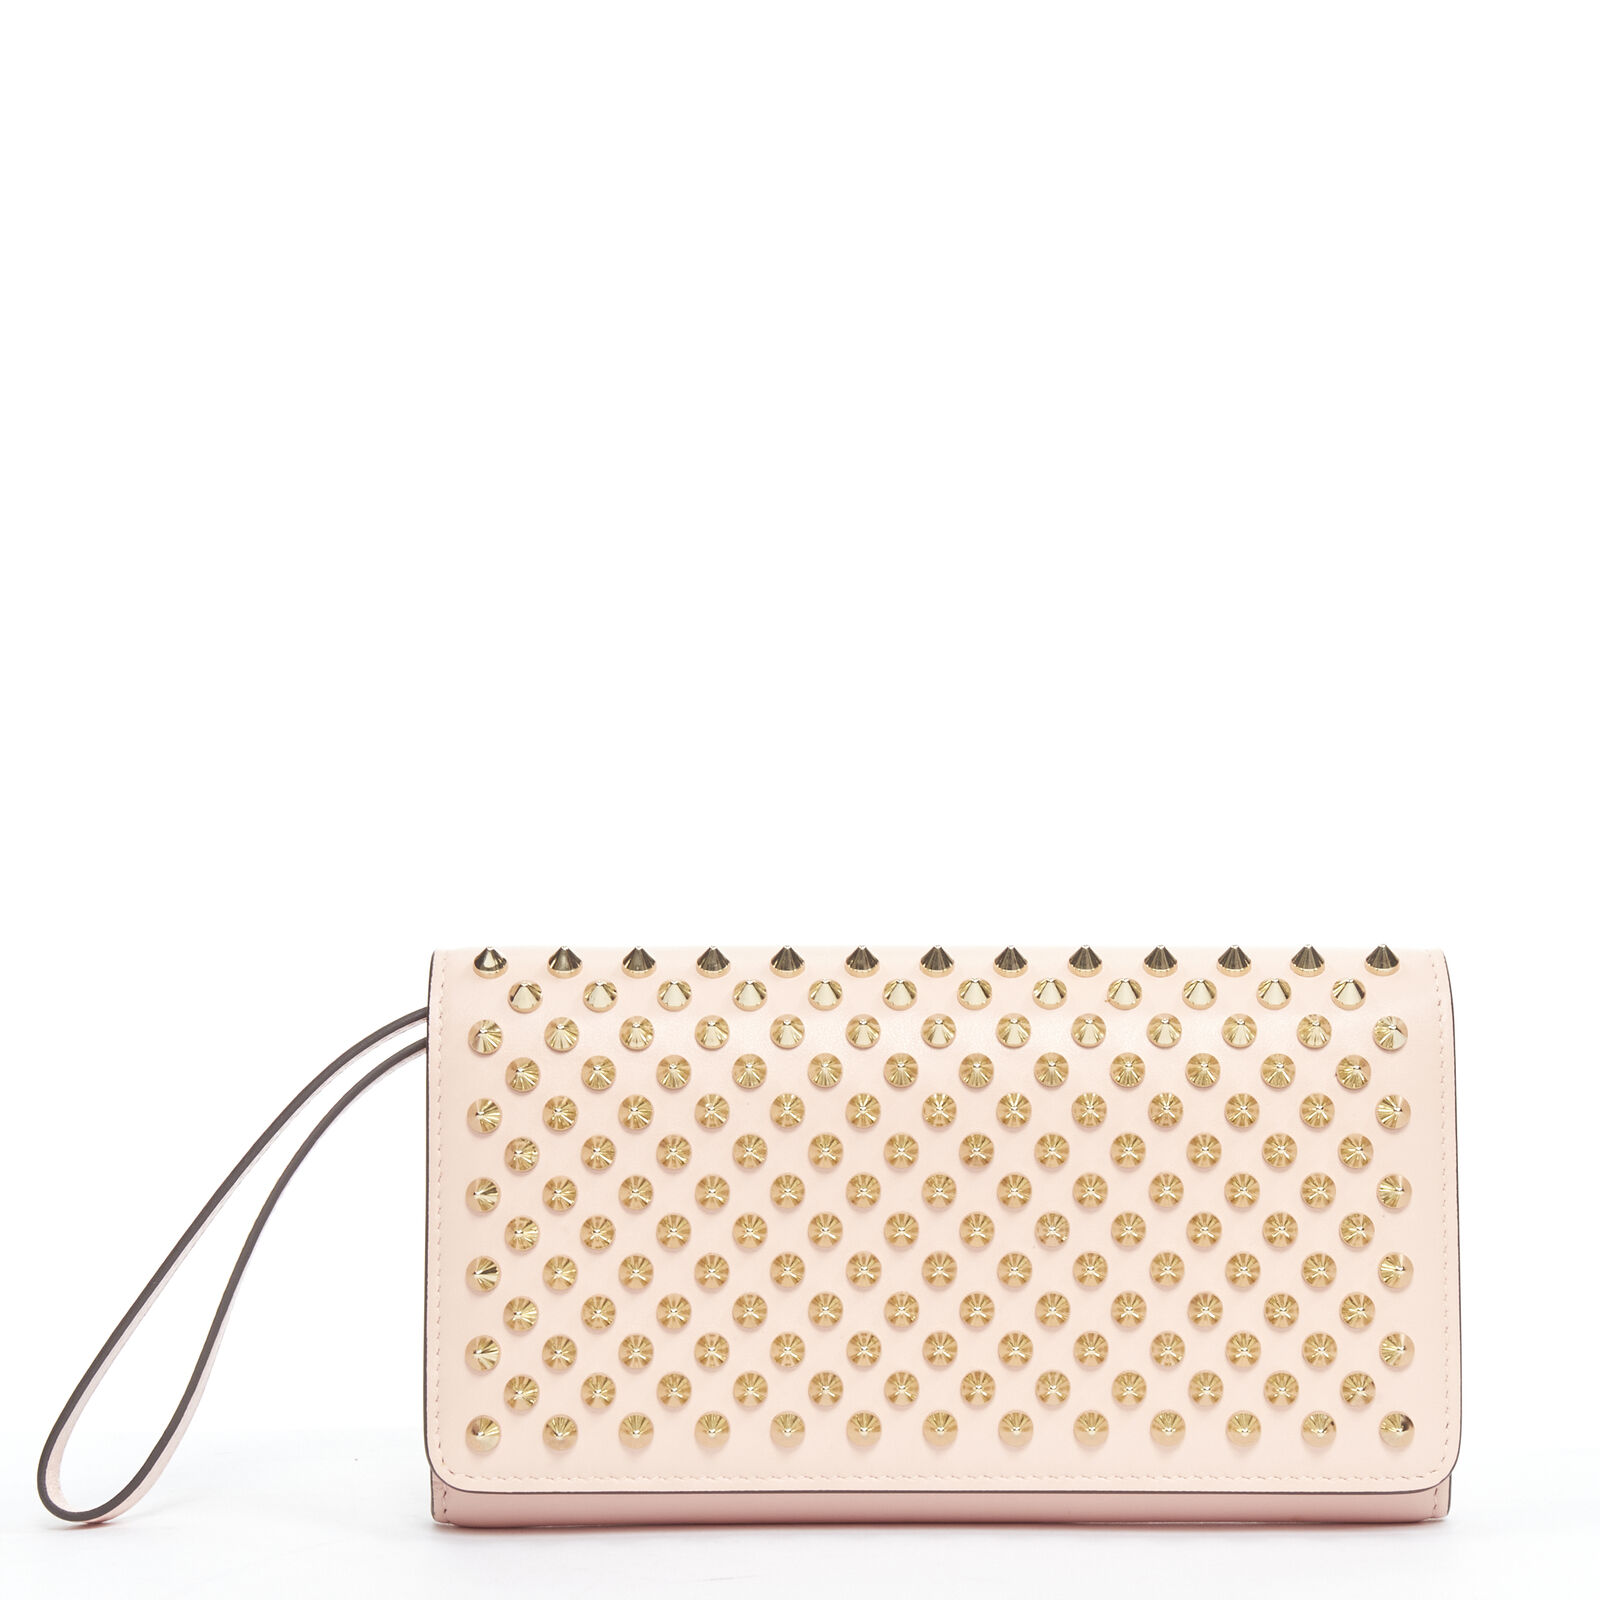 new CHRISTIAN LOUBOUTIN Macaron pink gold spike stud flap wallet clutch bag